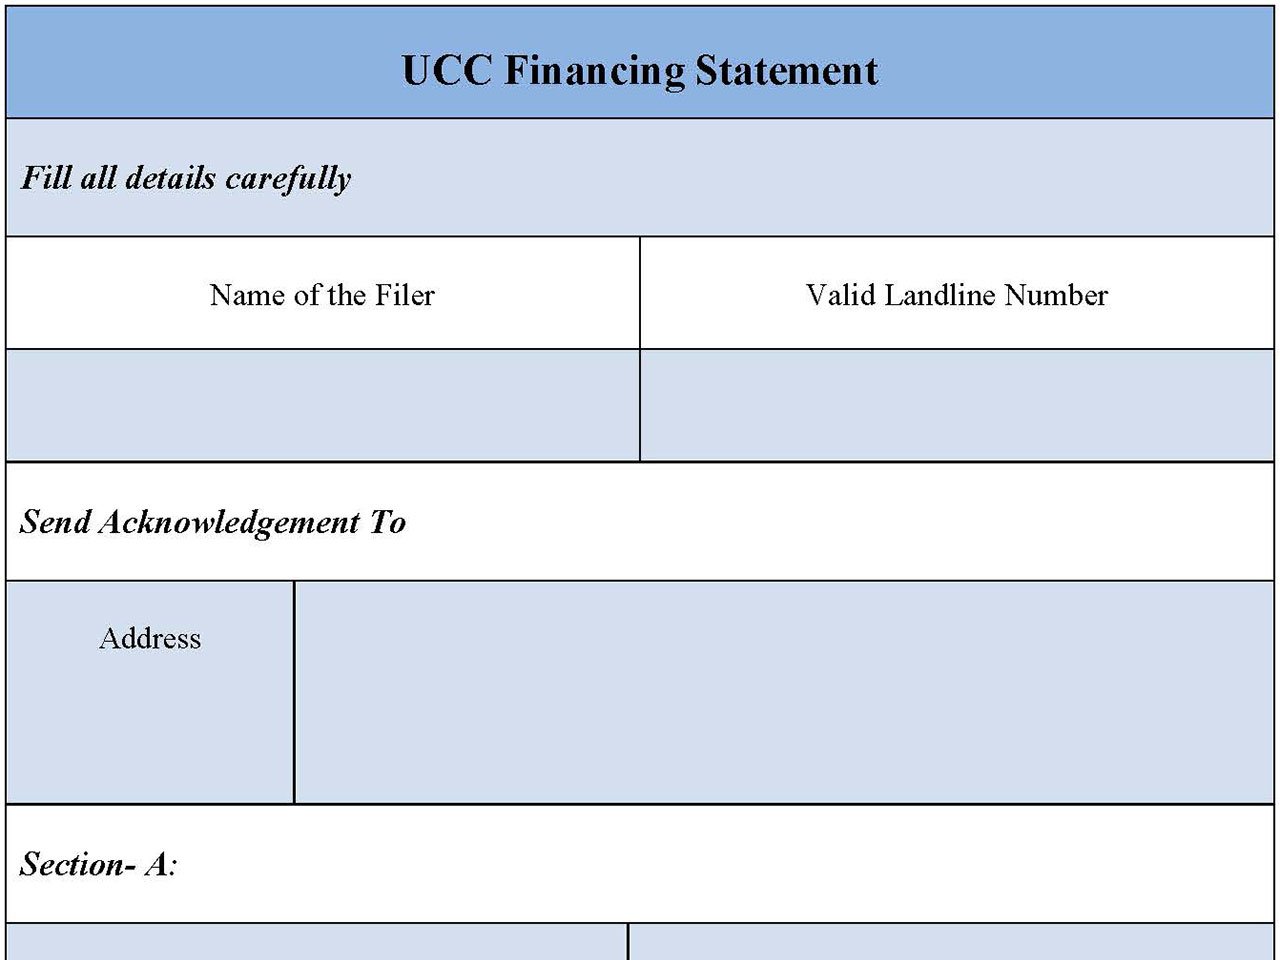 UCC Financing Statement Form